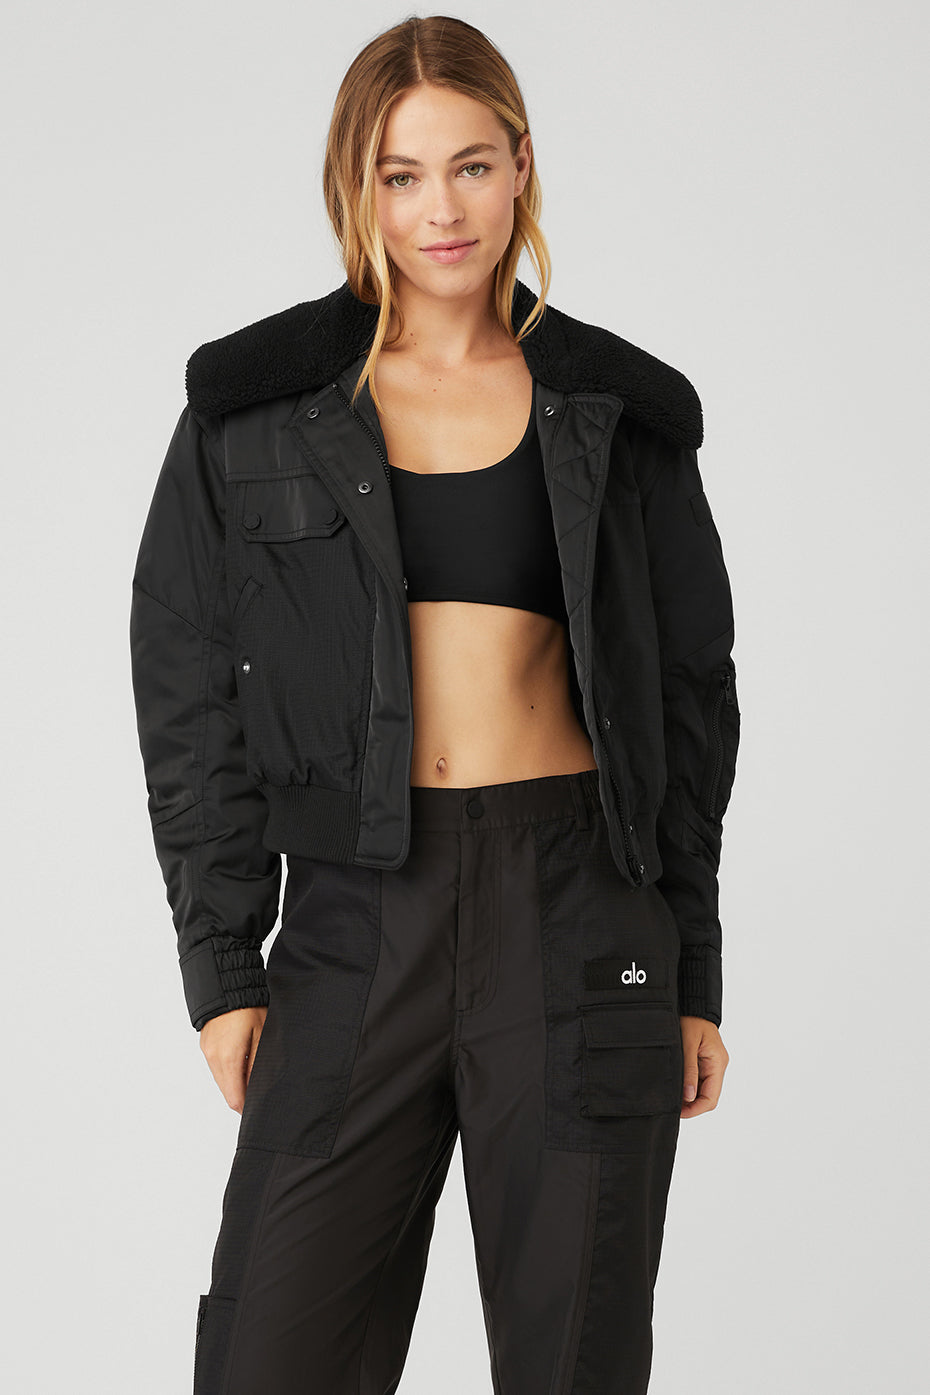 Alo Yoga Orion Cropped Puffer Jacket in Black Size Medium - Coats & jackets